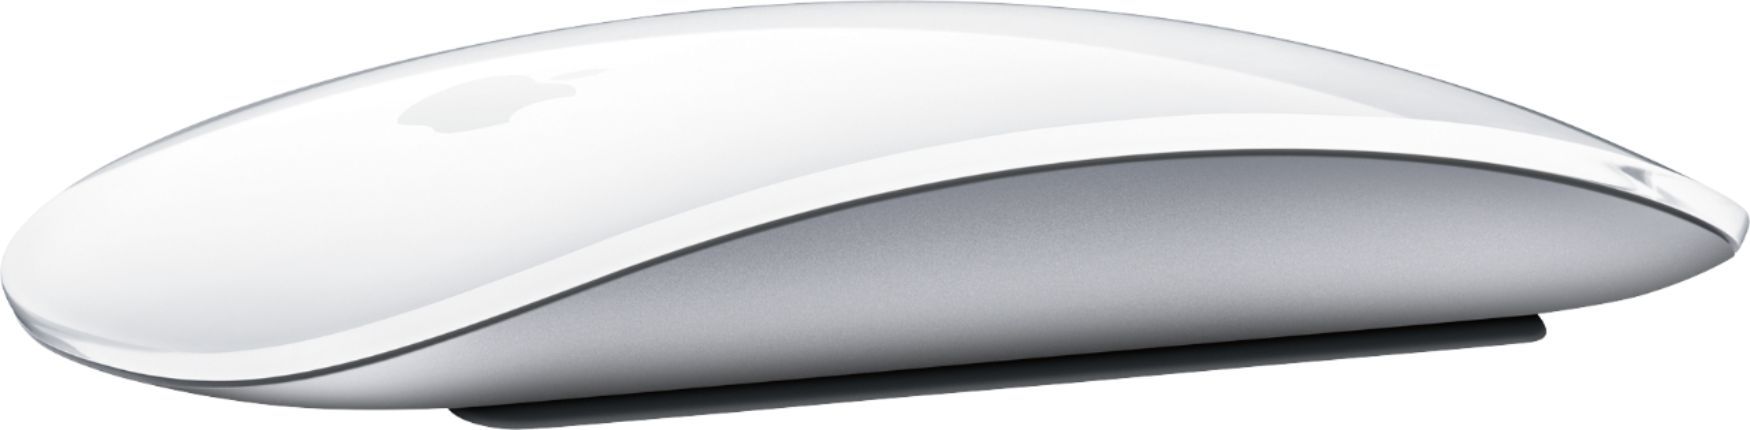 Apple Magic Mouse 2 Silver MLA02LL/A - Best Buy | Best Buy U.S.